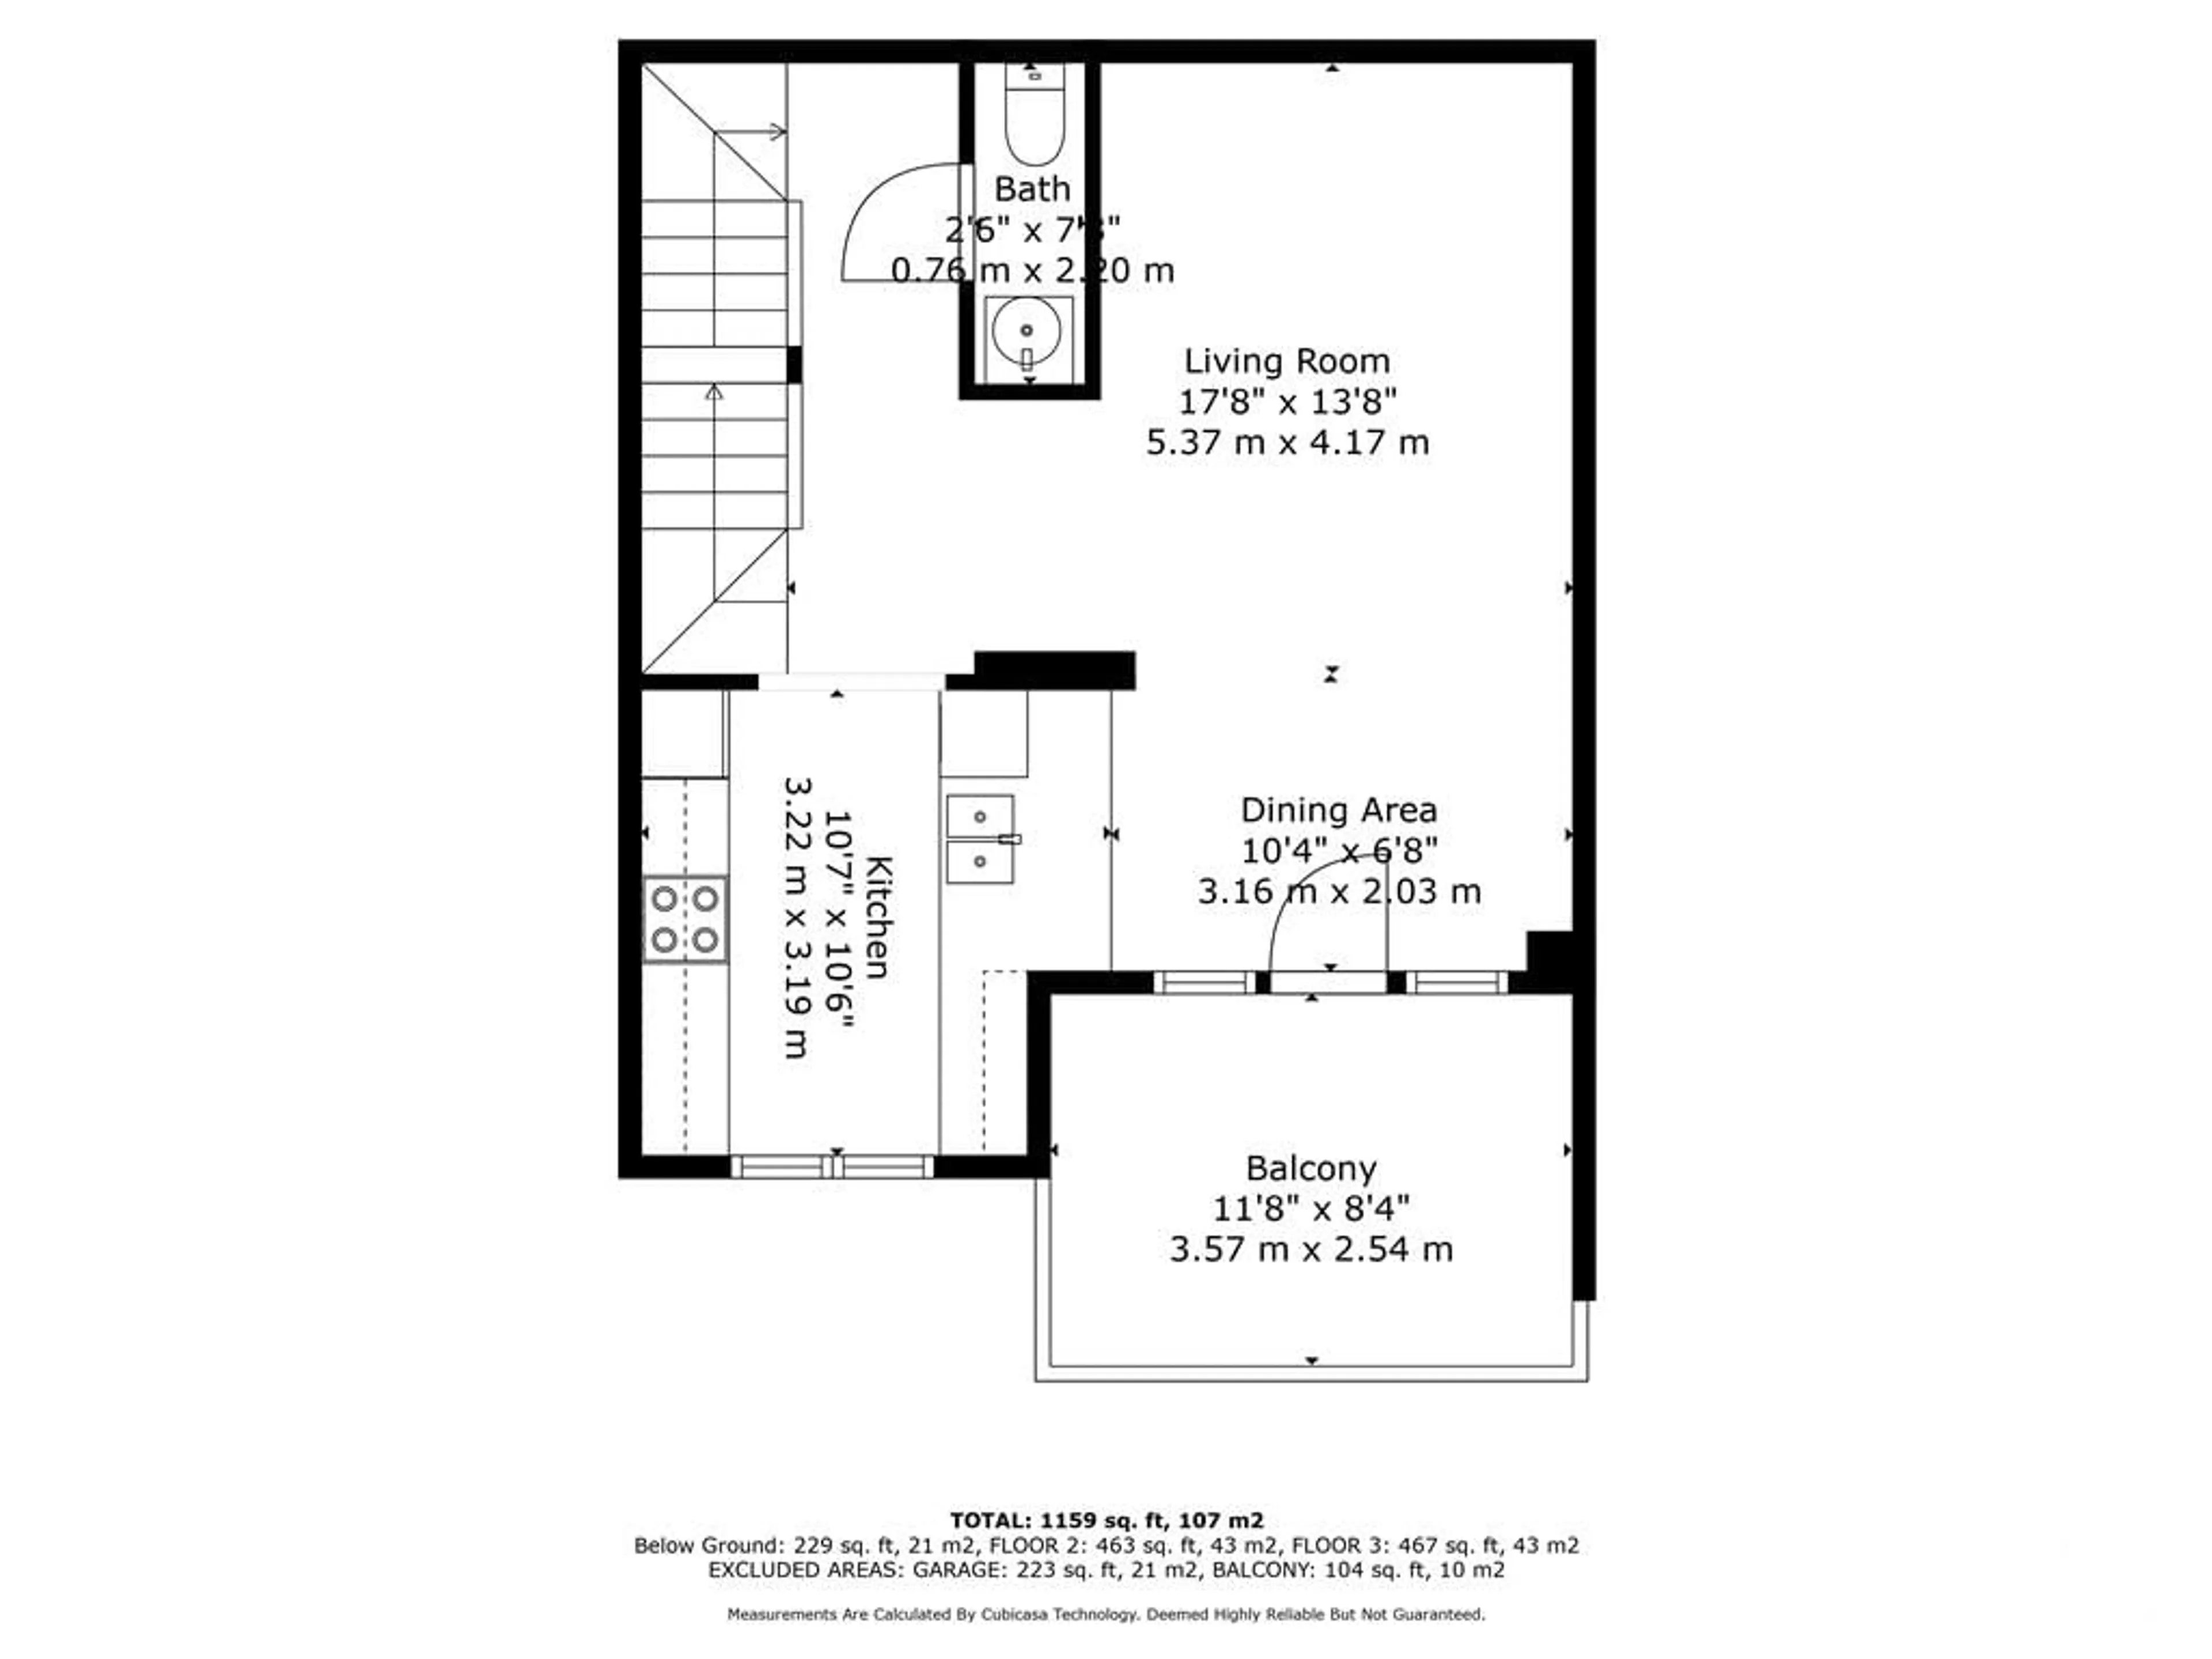 Floor plan for 452 RIVERBOAT Hts, Ottawa Ontario K2J 0R9